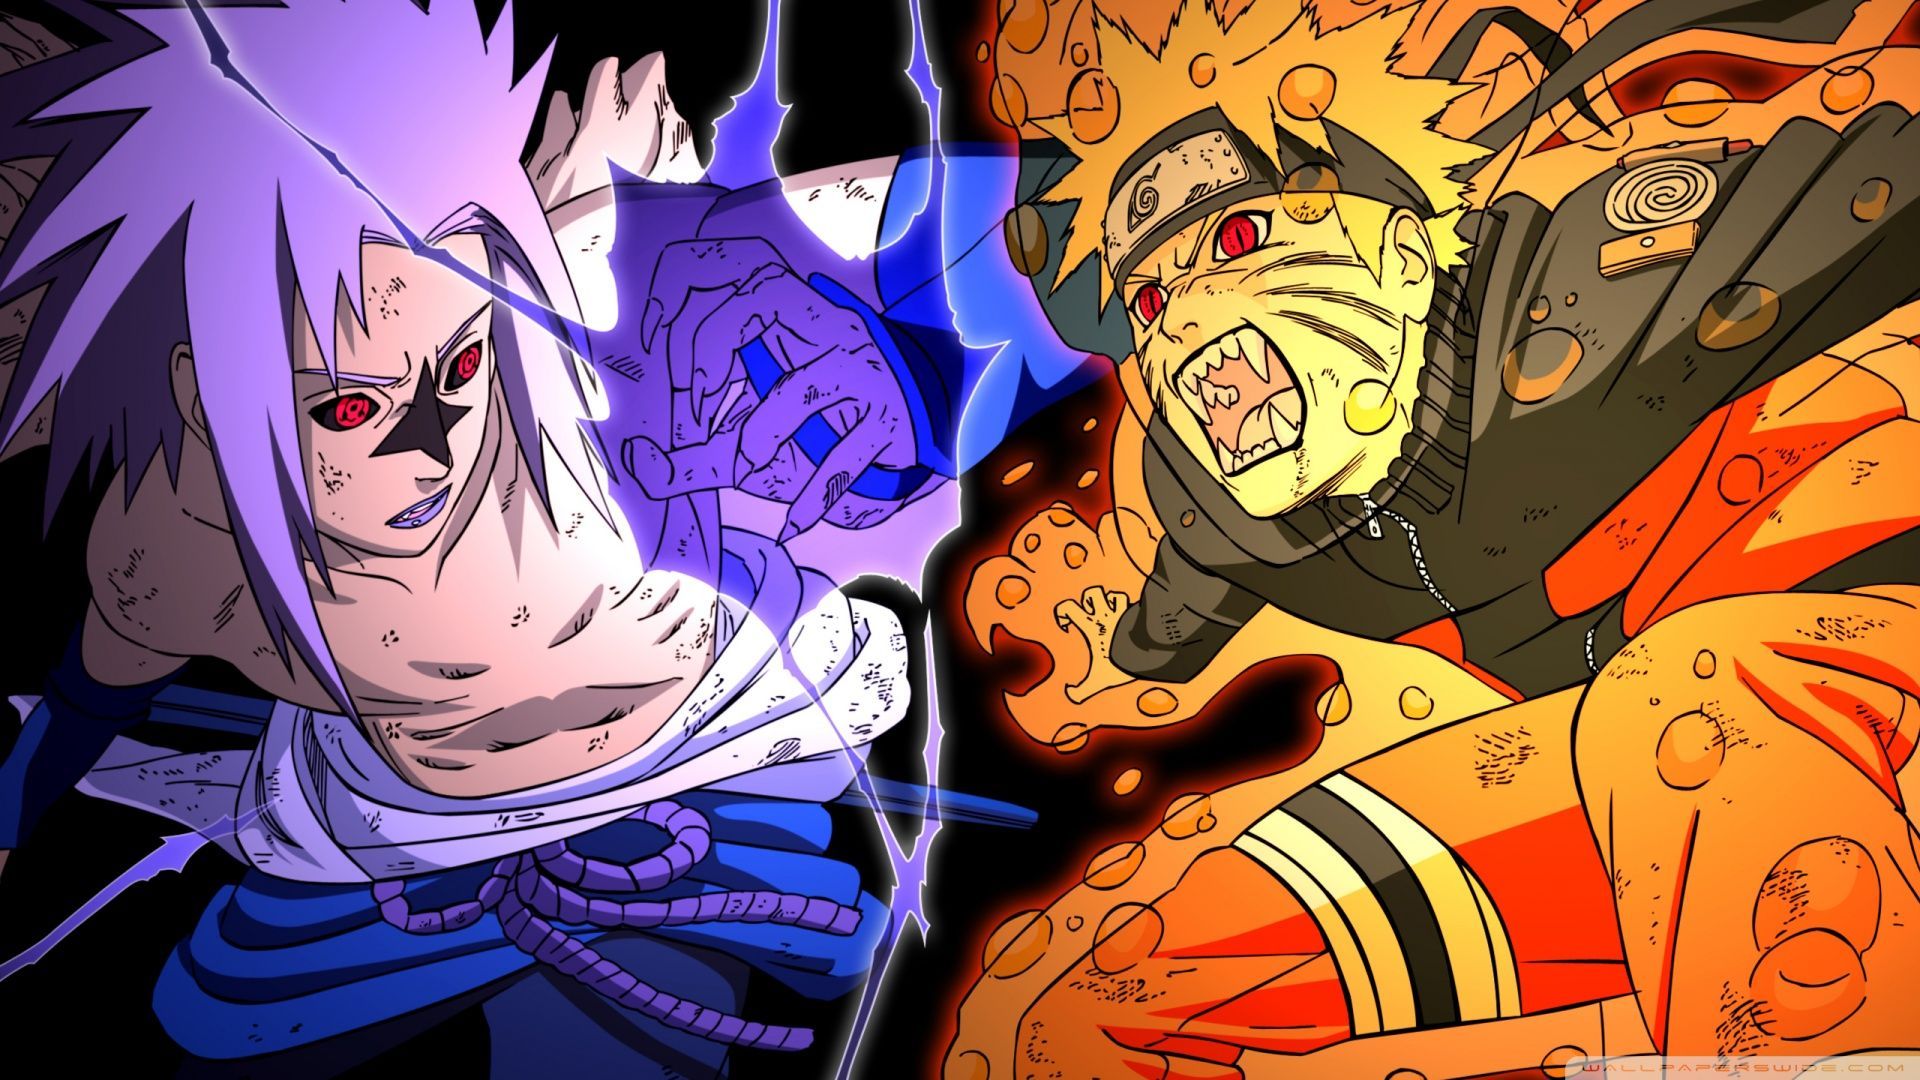 Naruto and Sasuke Wallpaper Free Naruto and Sasuke Background